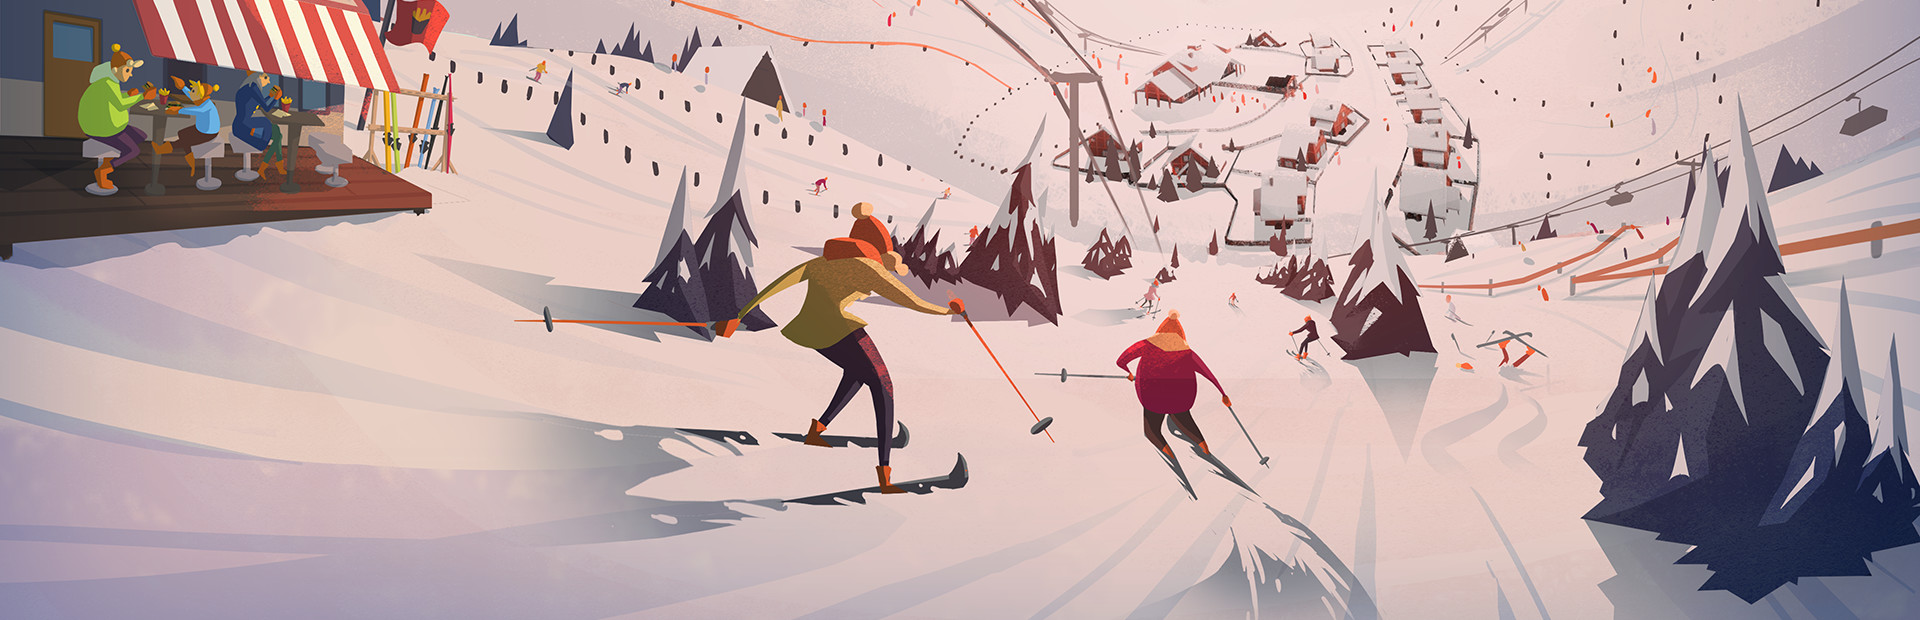 Snowtopia: Ski Resort Builder cover image